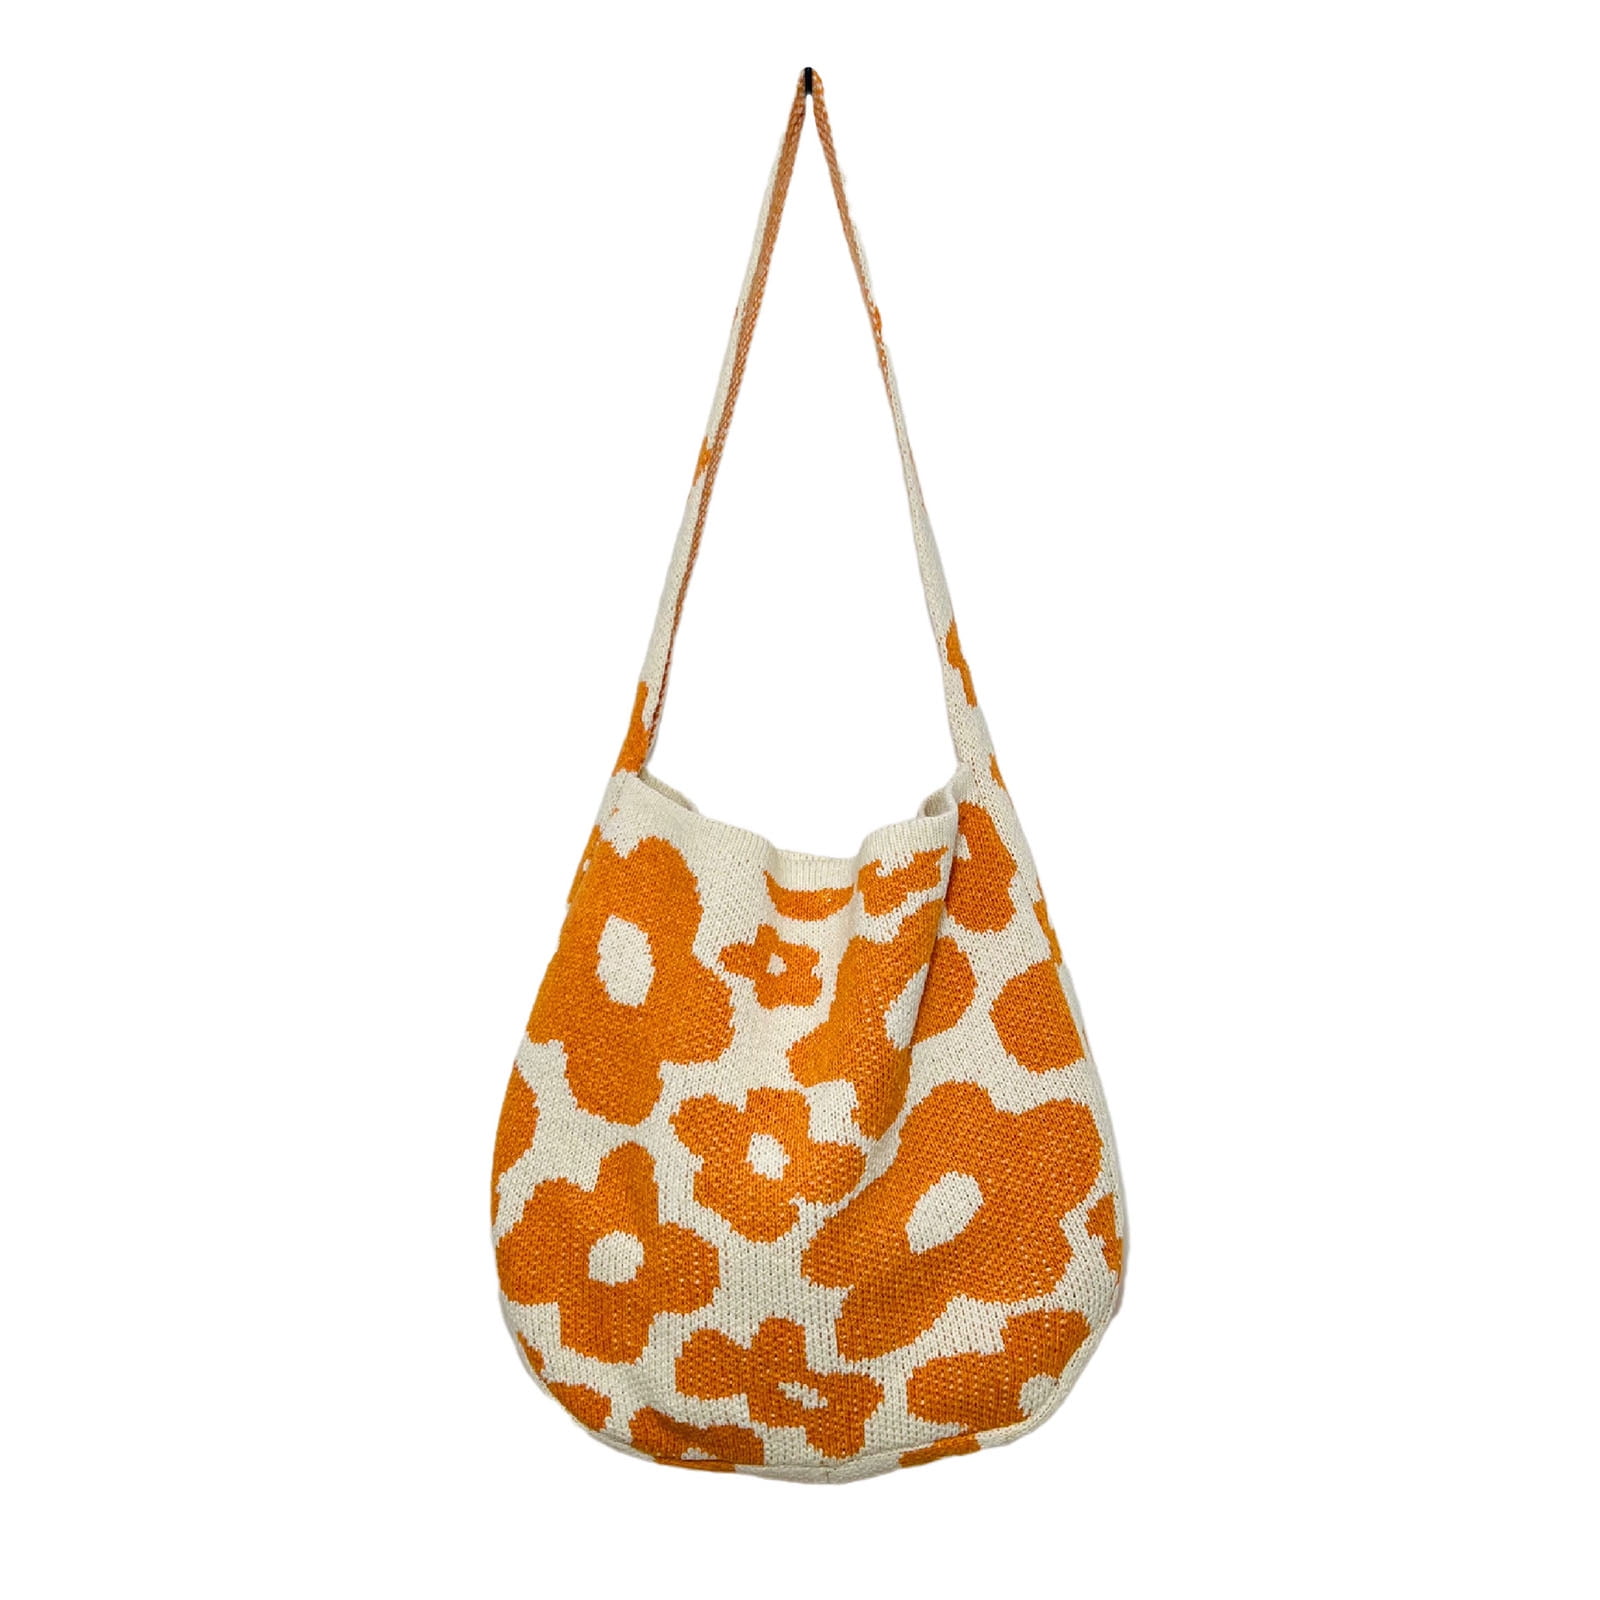 Cute Tangerine Shaped Small Storage Bag, Crochet Drawstring Bags, Mini Handwoven Cotton Handbag, Coin Purse Pouch, Orange Knitting Change Wallet